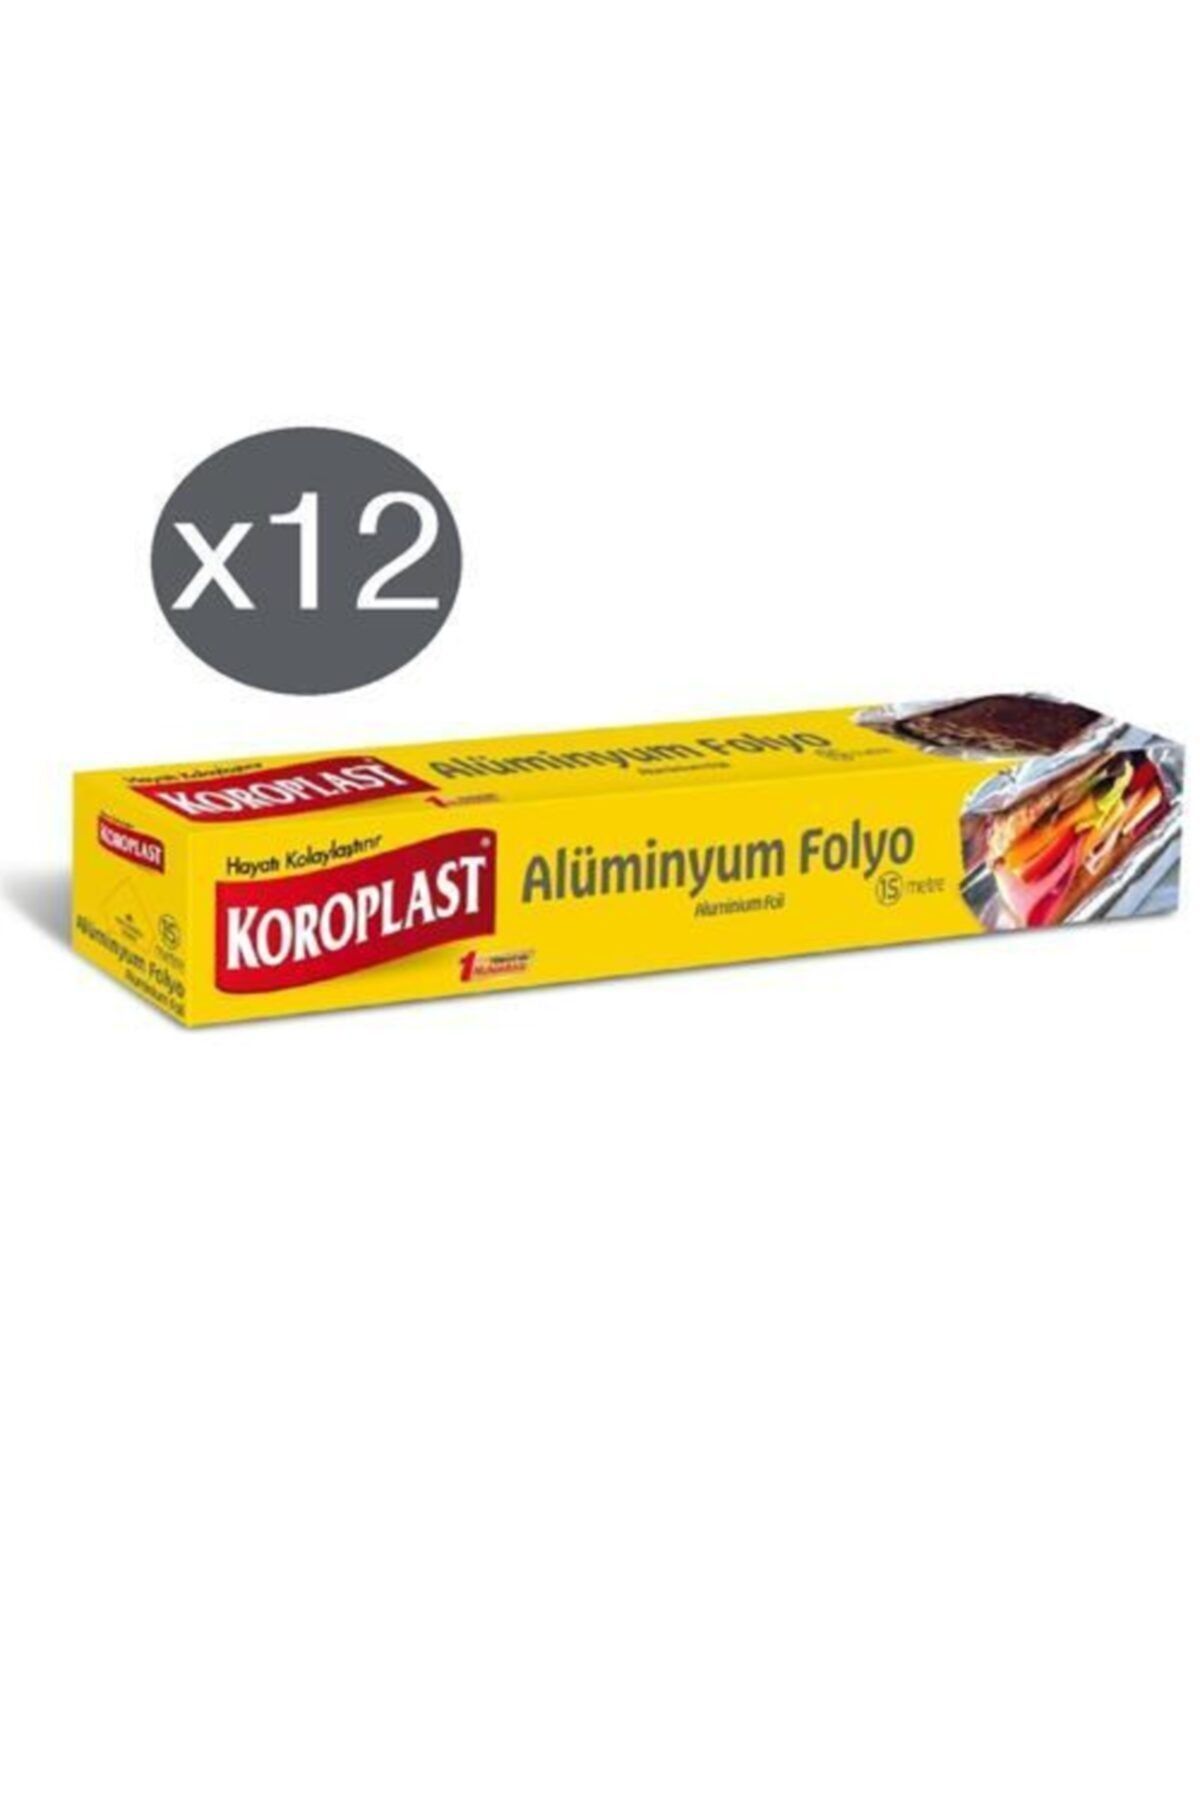 Koroplast Alüminyum Folyo 15 Metre X 12 Paket (30cm*15m)